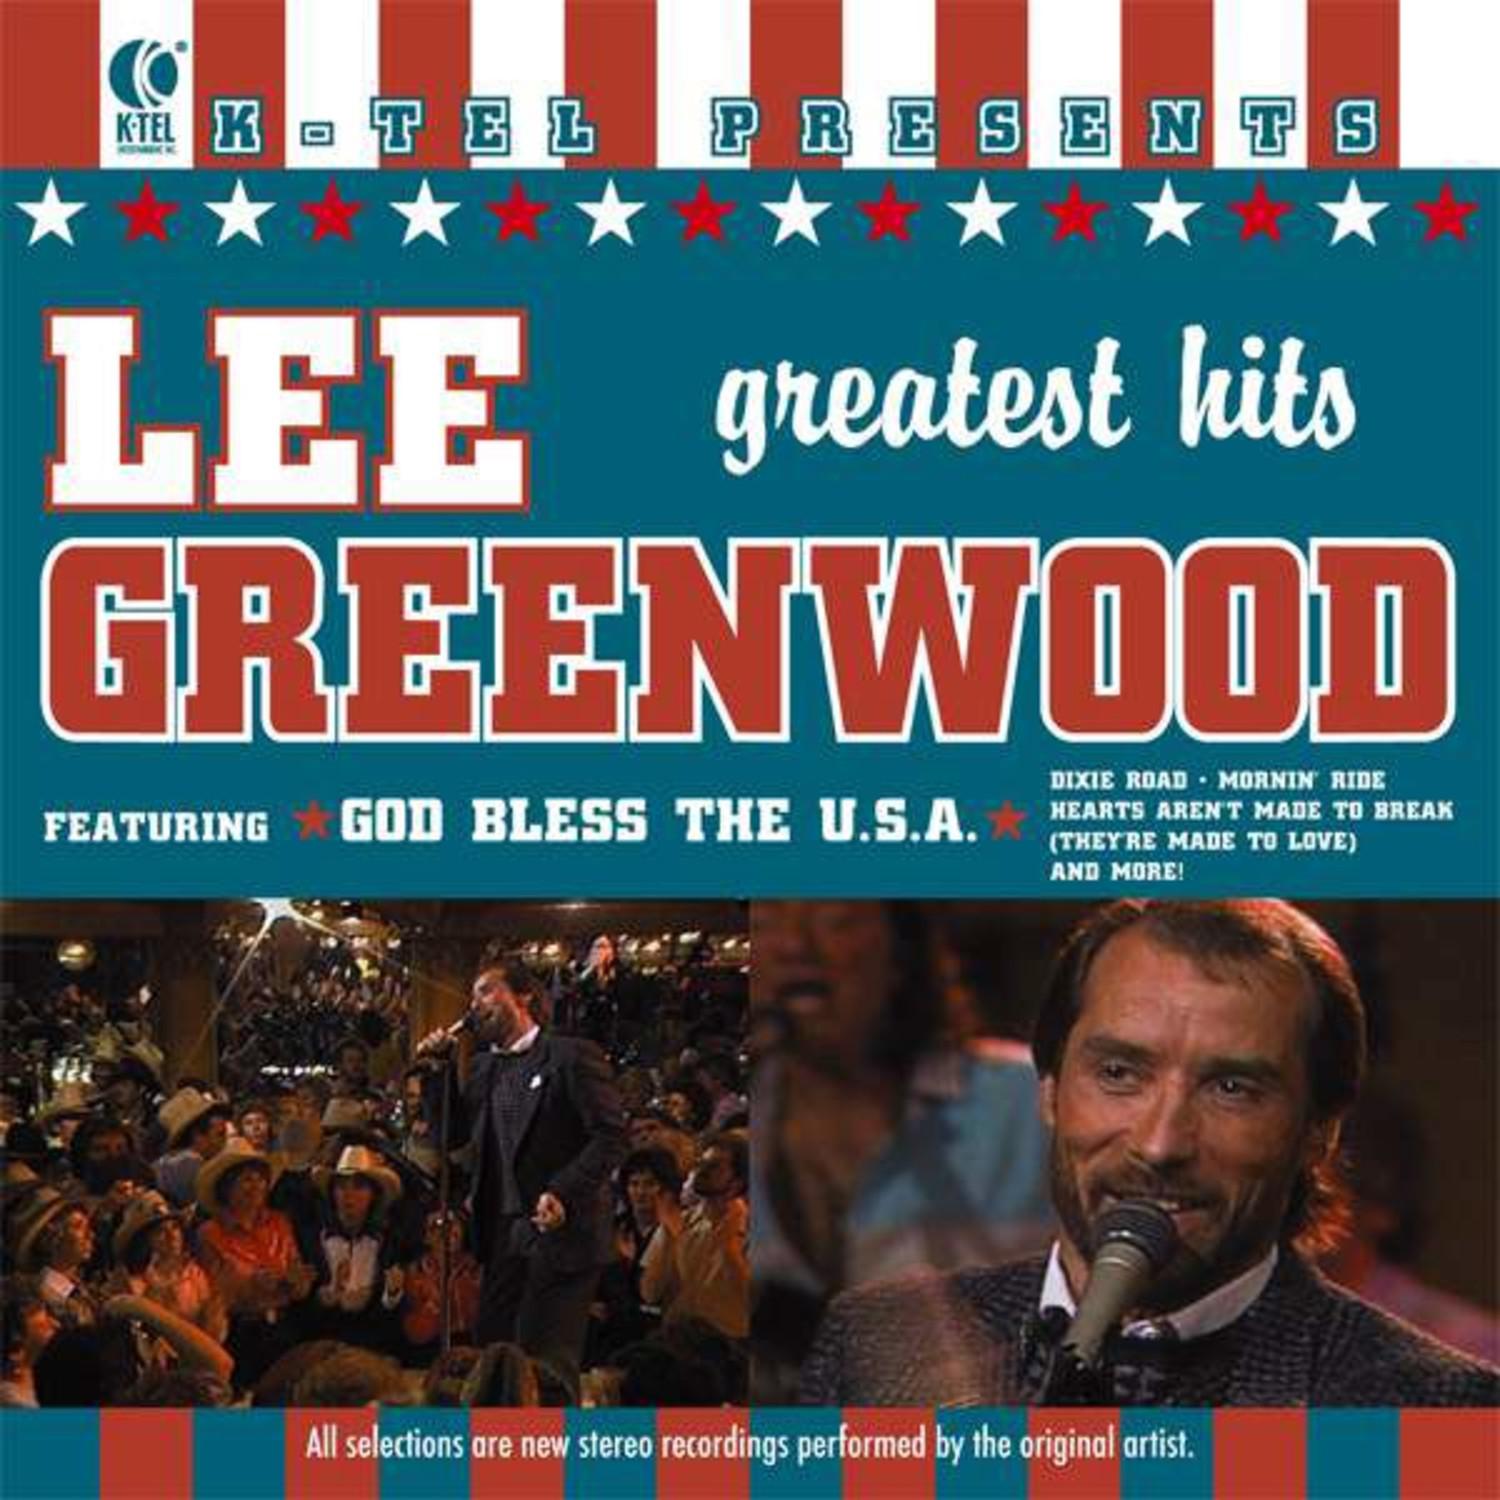 Lee Greenwood's Greatest Hits